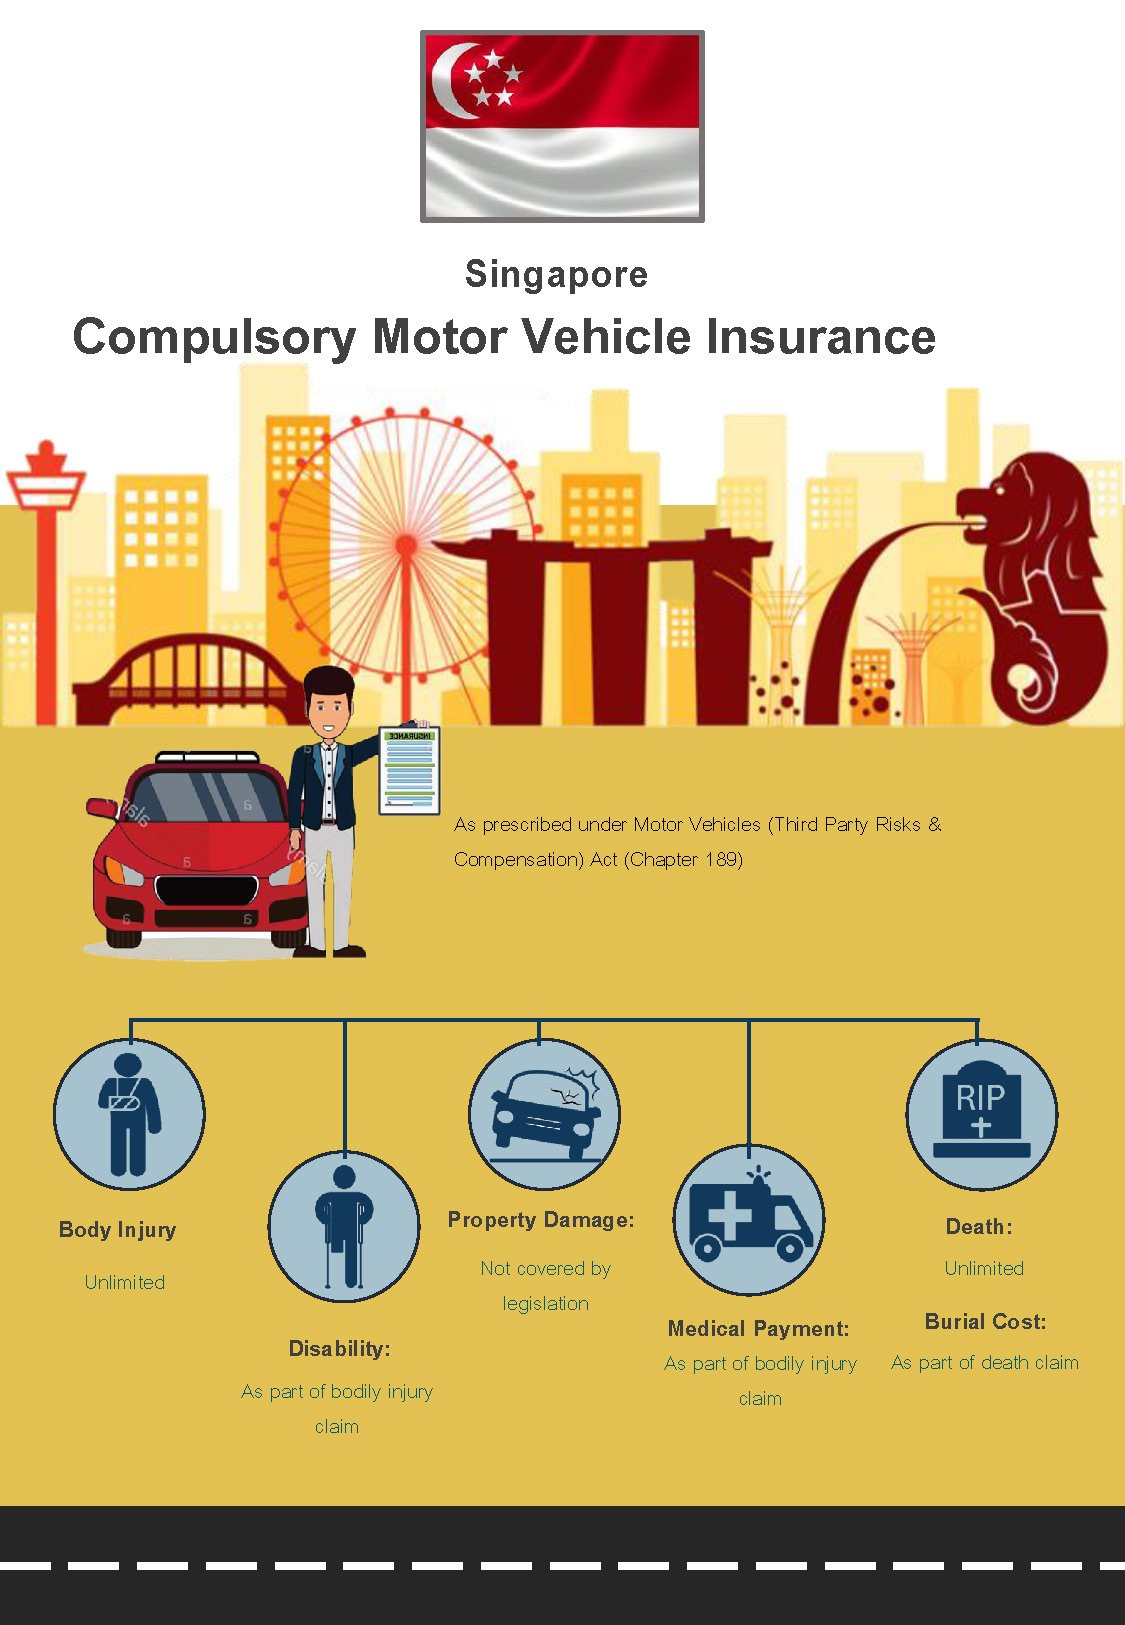 Compulsory Motor Insurance coverage information of Singapore